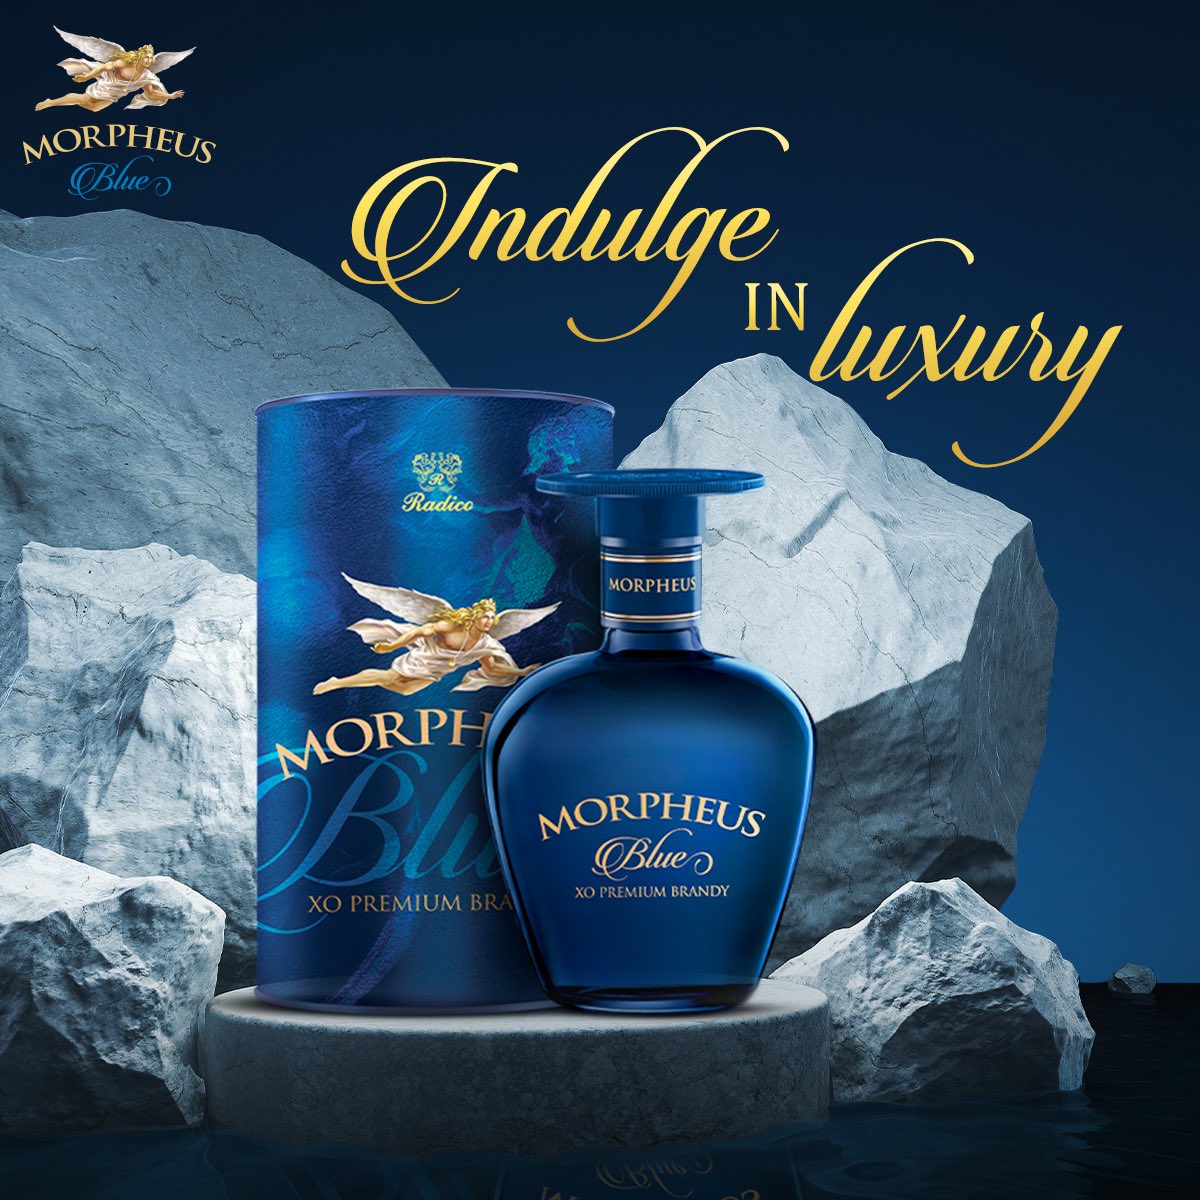 Experience true luxury in each sip of Morpheus Blue and elevate your evenings.

#MorpheusBrandy #Brandy #MorpheusDareToDream #MorpheusBlue #DareToDream #LargestSellingBrandy